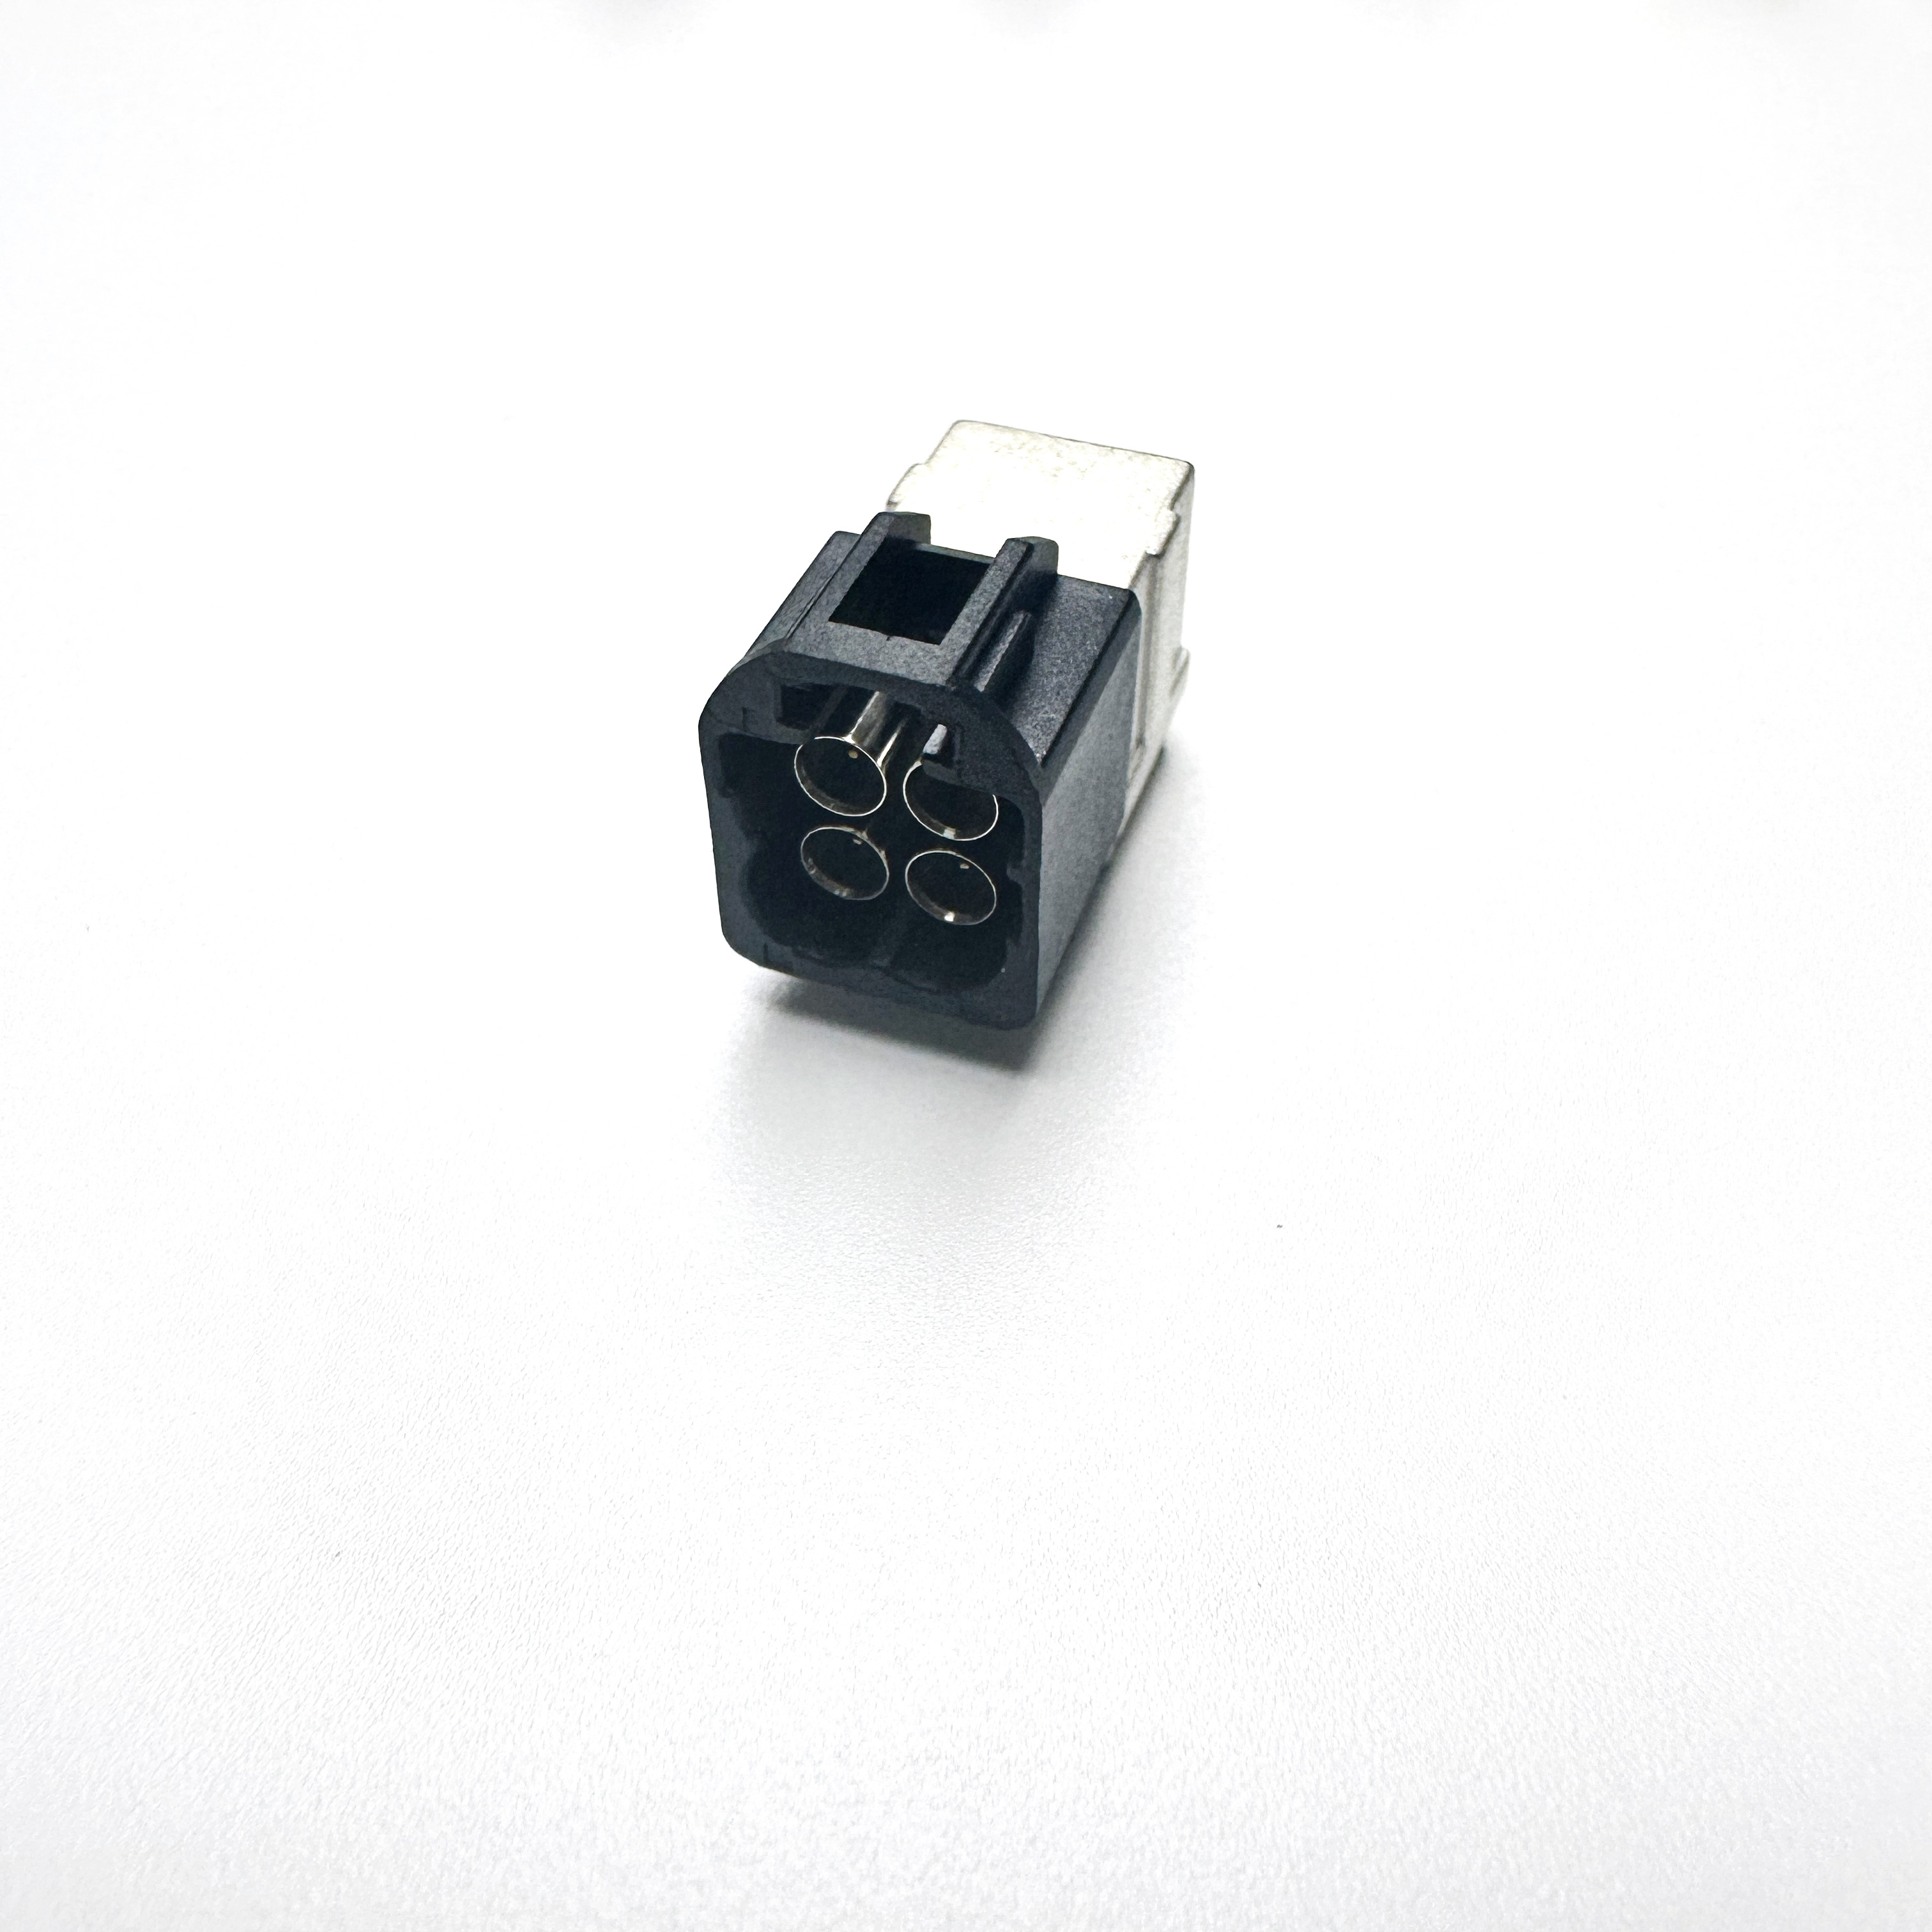 HOT SALE High Frequency 4Pin Automotive Male Hfm Quad Connectors Mini FaKra (LSBG) Bent Pin Block-A (Black) for car